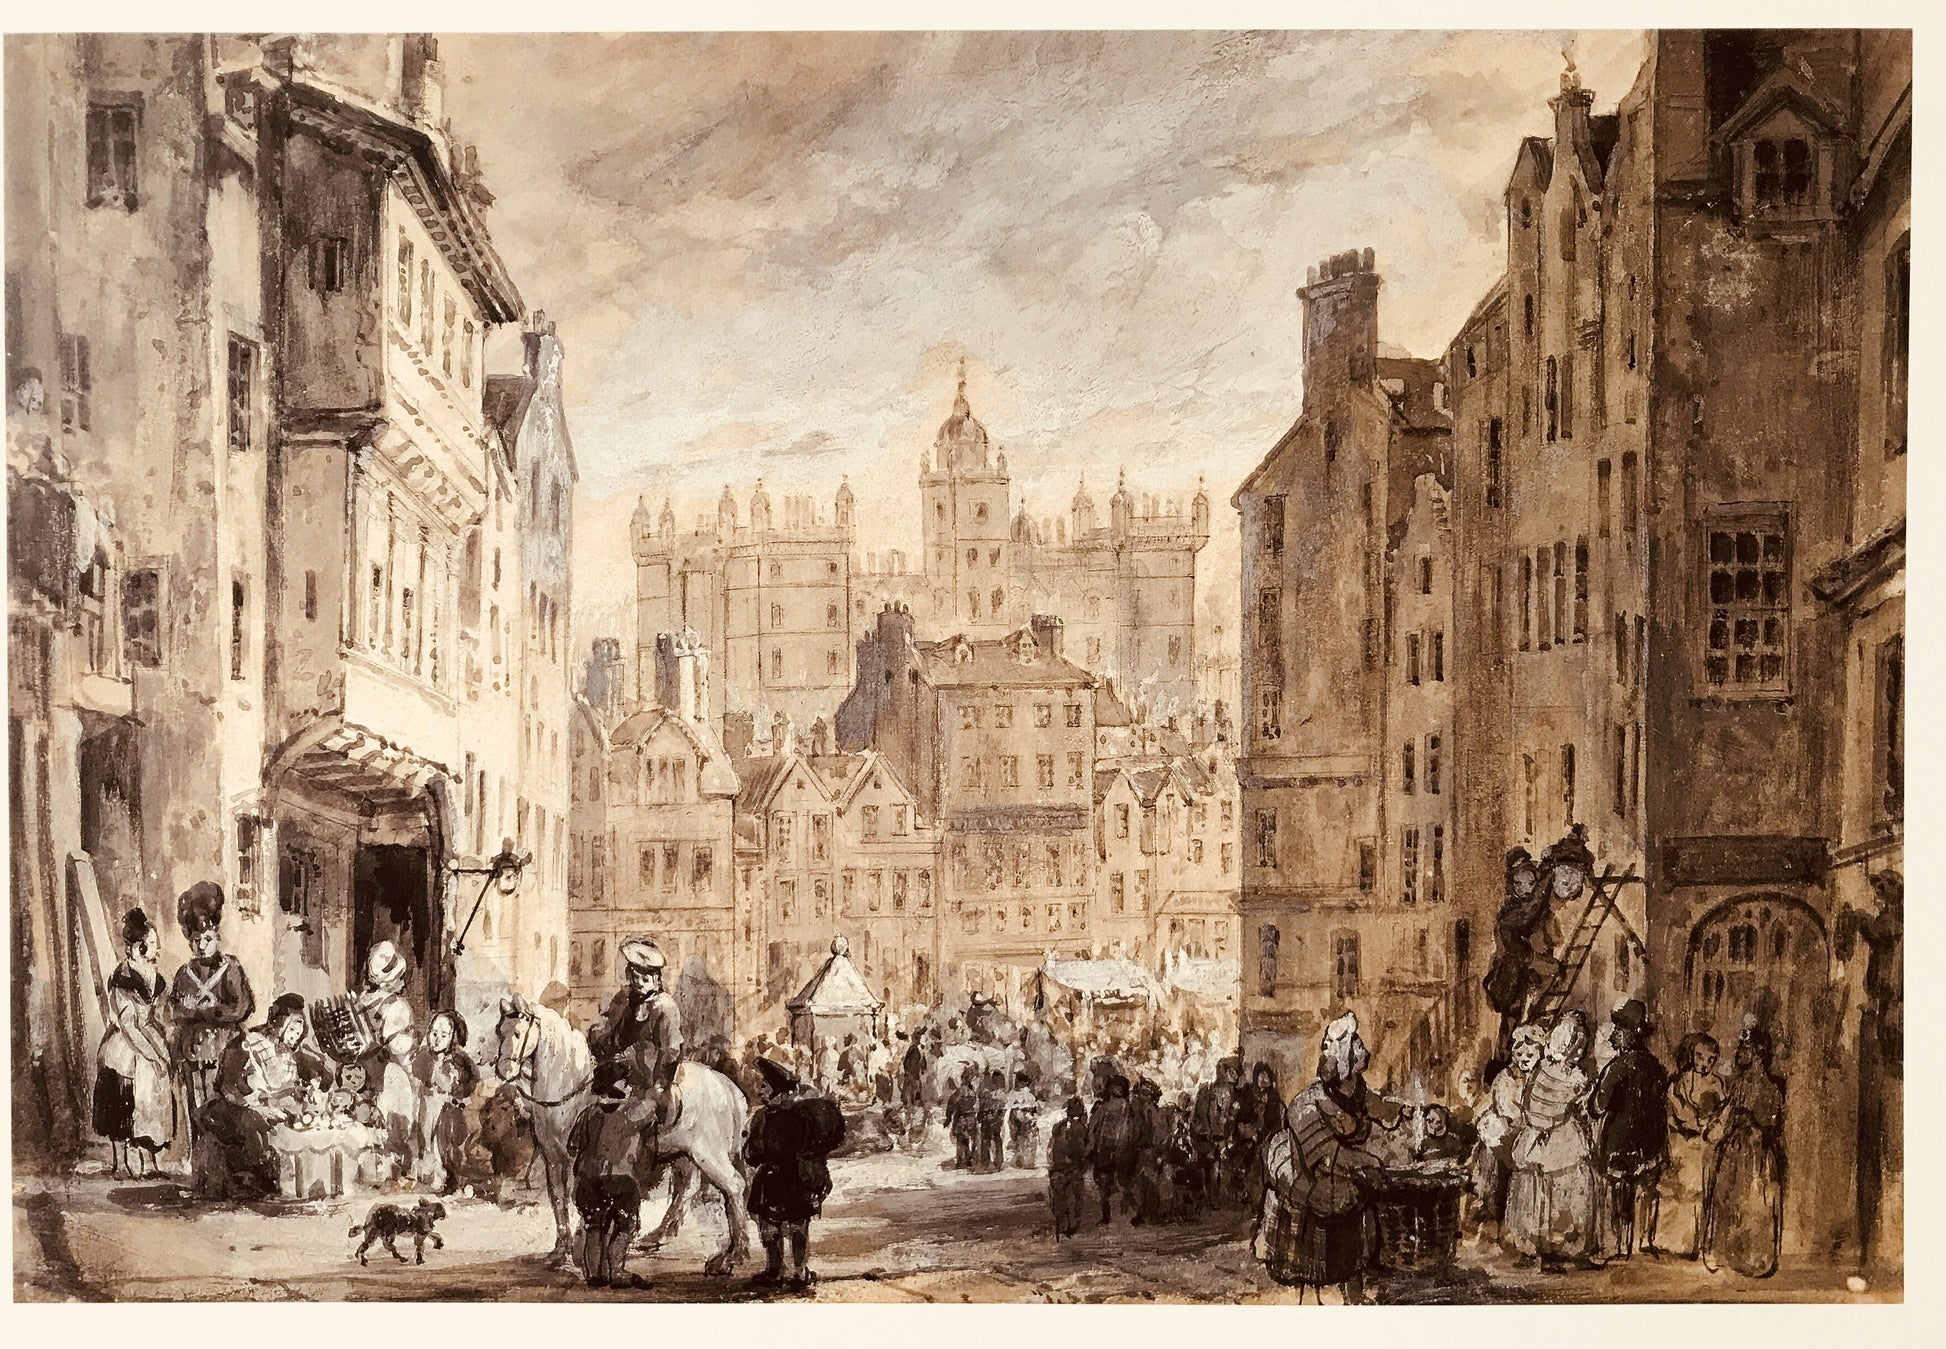 Heriot’s Hospital and Grassmarket Edinburgh art print (1850) | George Meikle Kemp and William Bonnar  The Trumpet Shop   